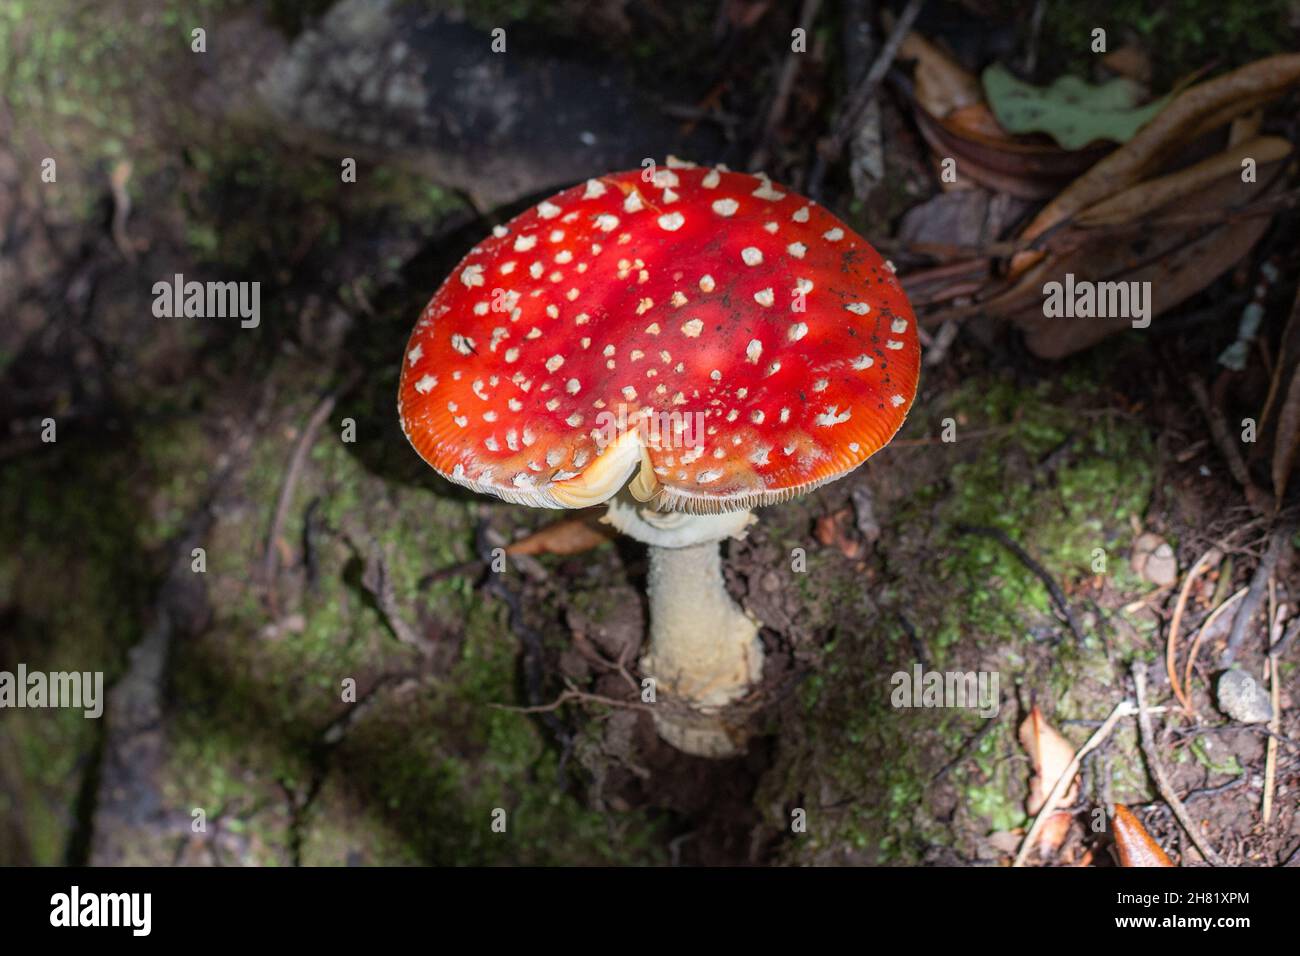 Pilze Amanita muscaria Pilz, häufig, aber giftig, wächst in Zealandia Stockfoto